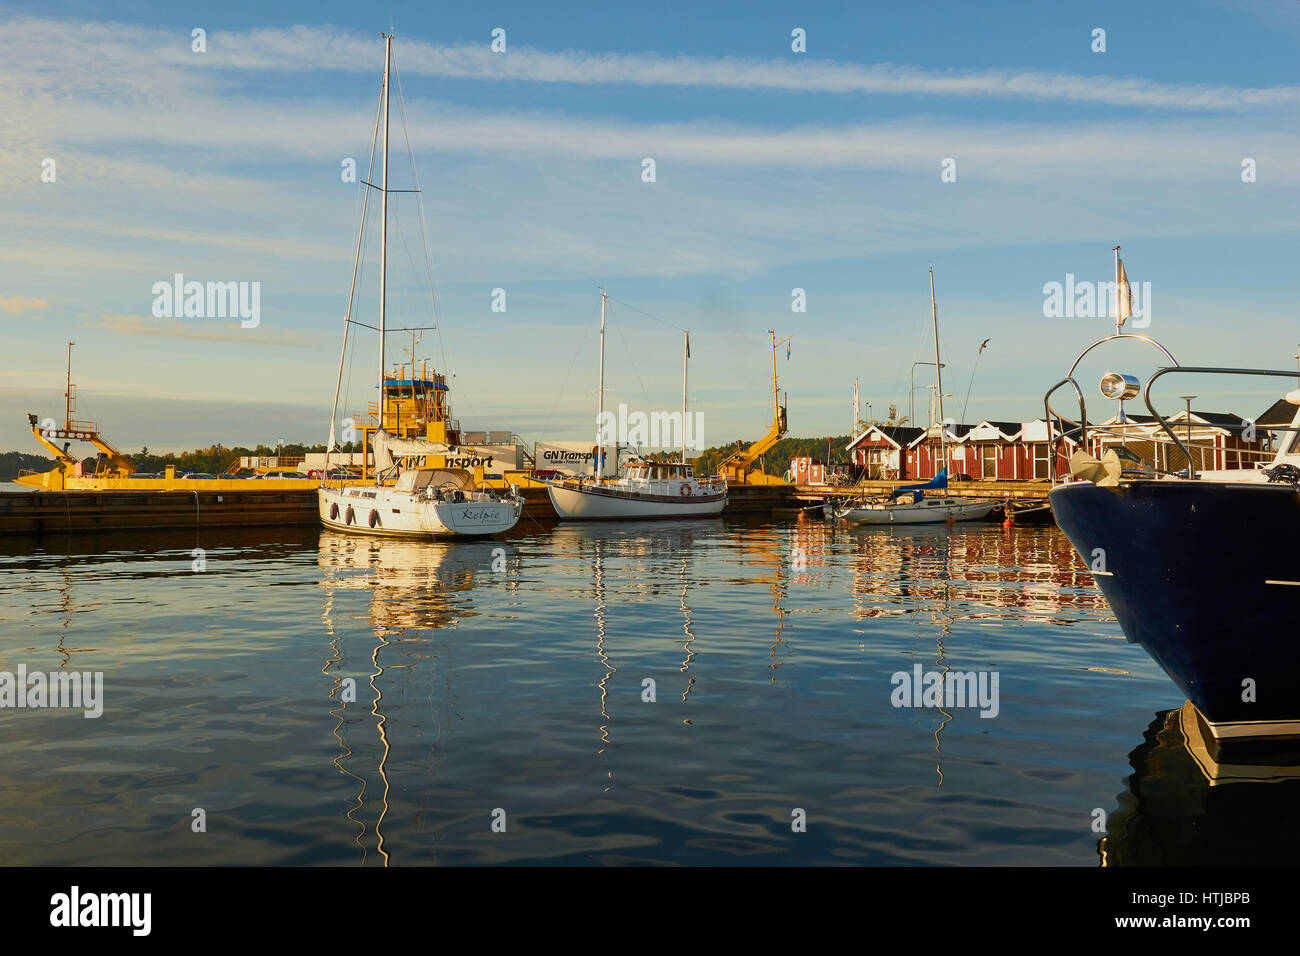 Vaxholm harbour, Stockholm archipelago, Sweden, Scandinavia Stock Photo